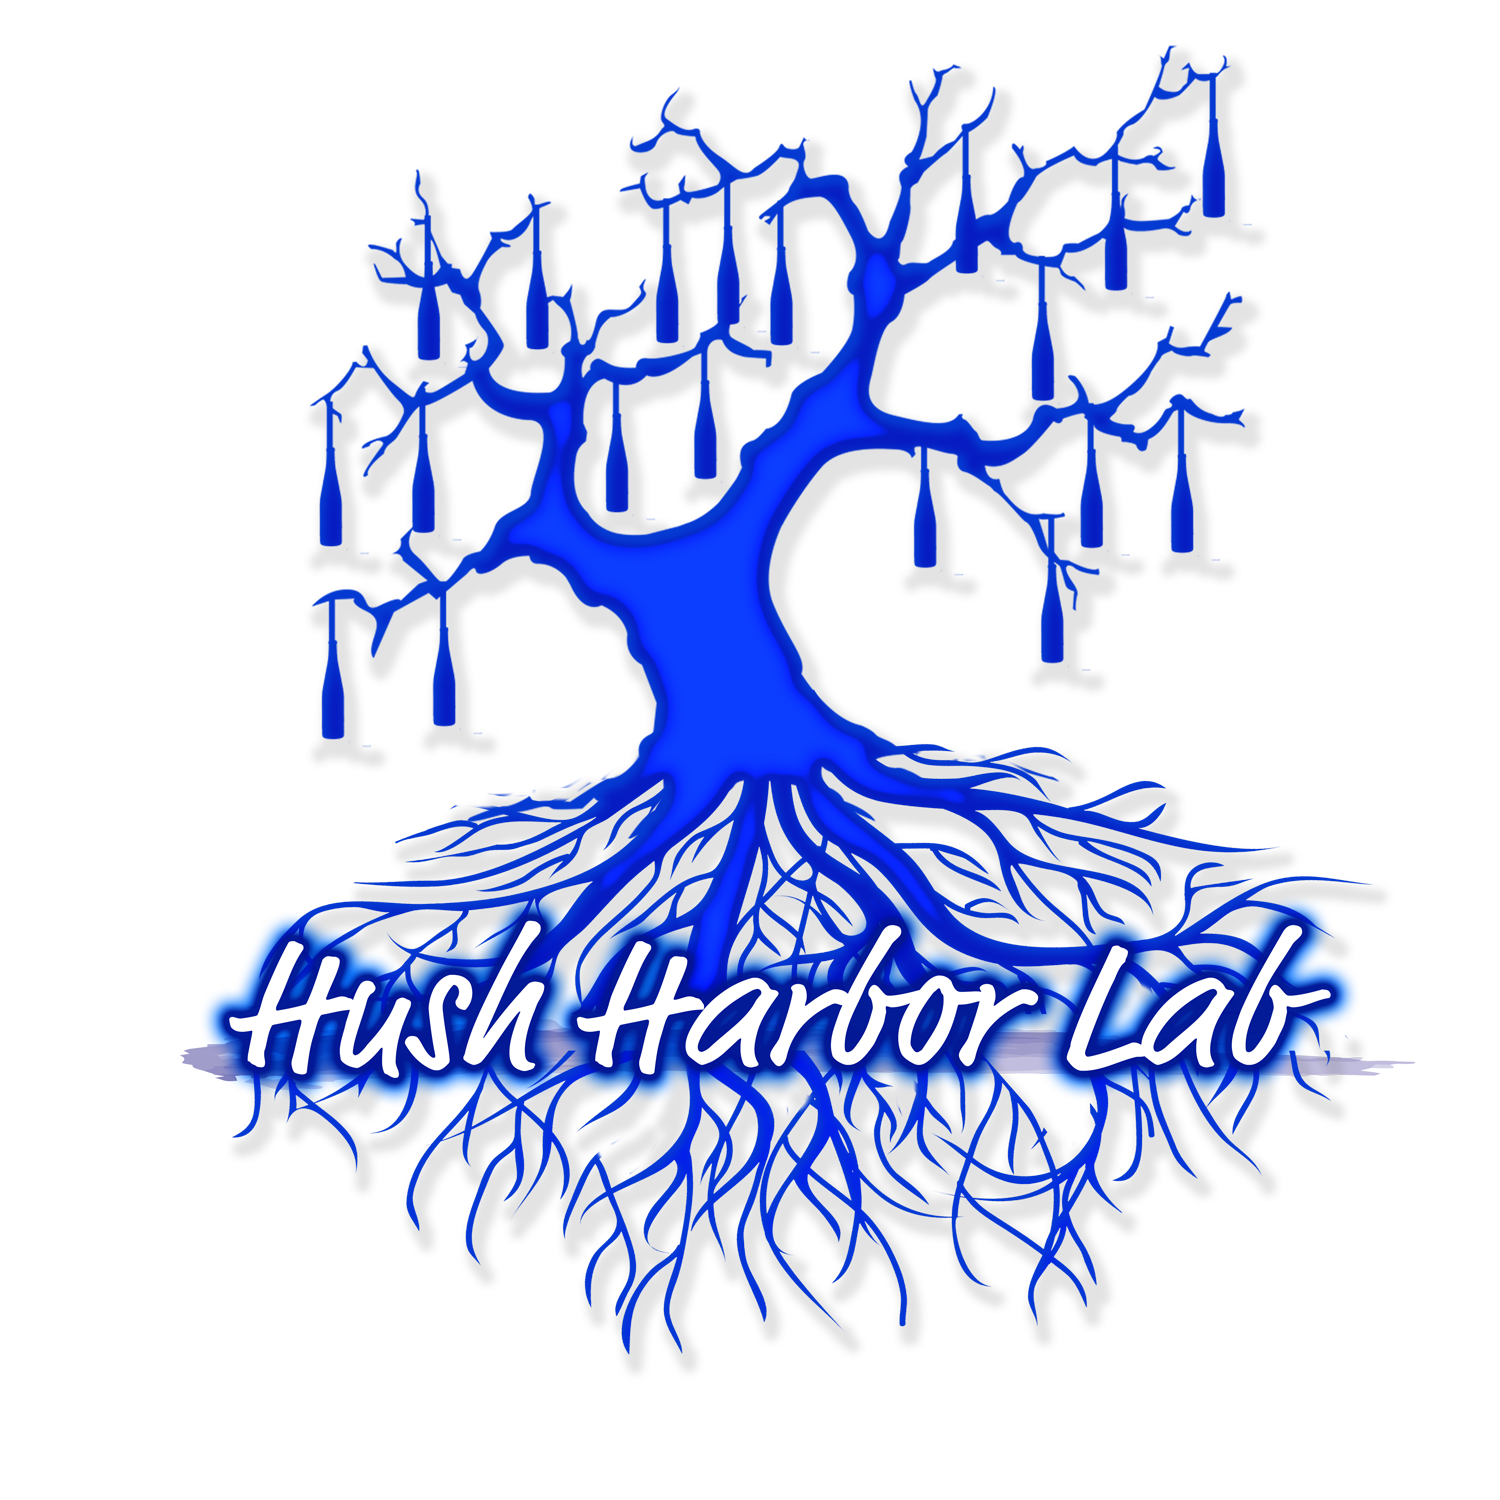 Hush Harbor Lab